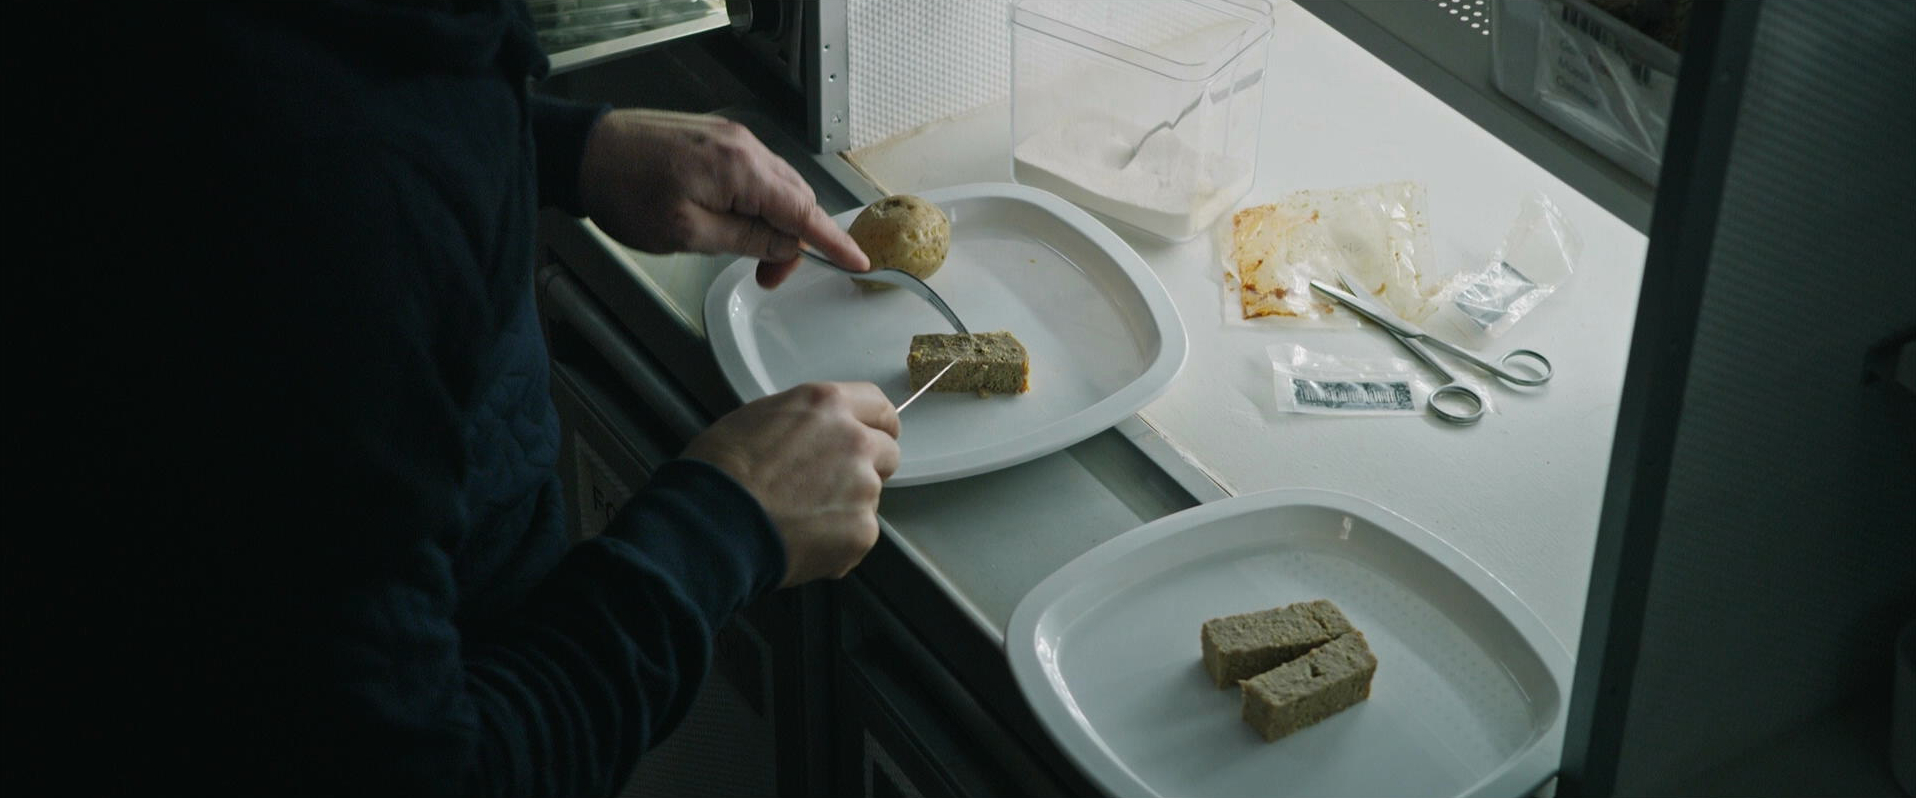 The Martian - Ridley Scott - Matt Damon - Mark Watney - food rationing - Mars